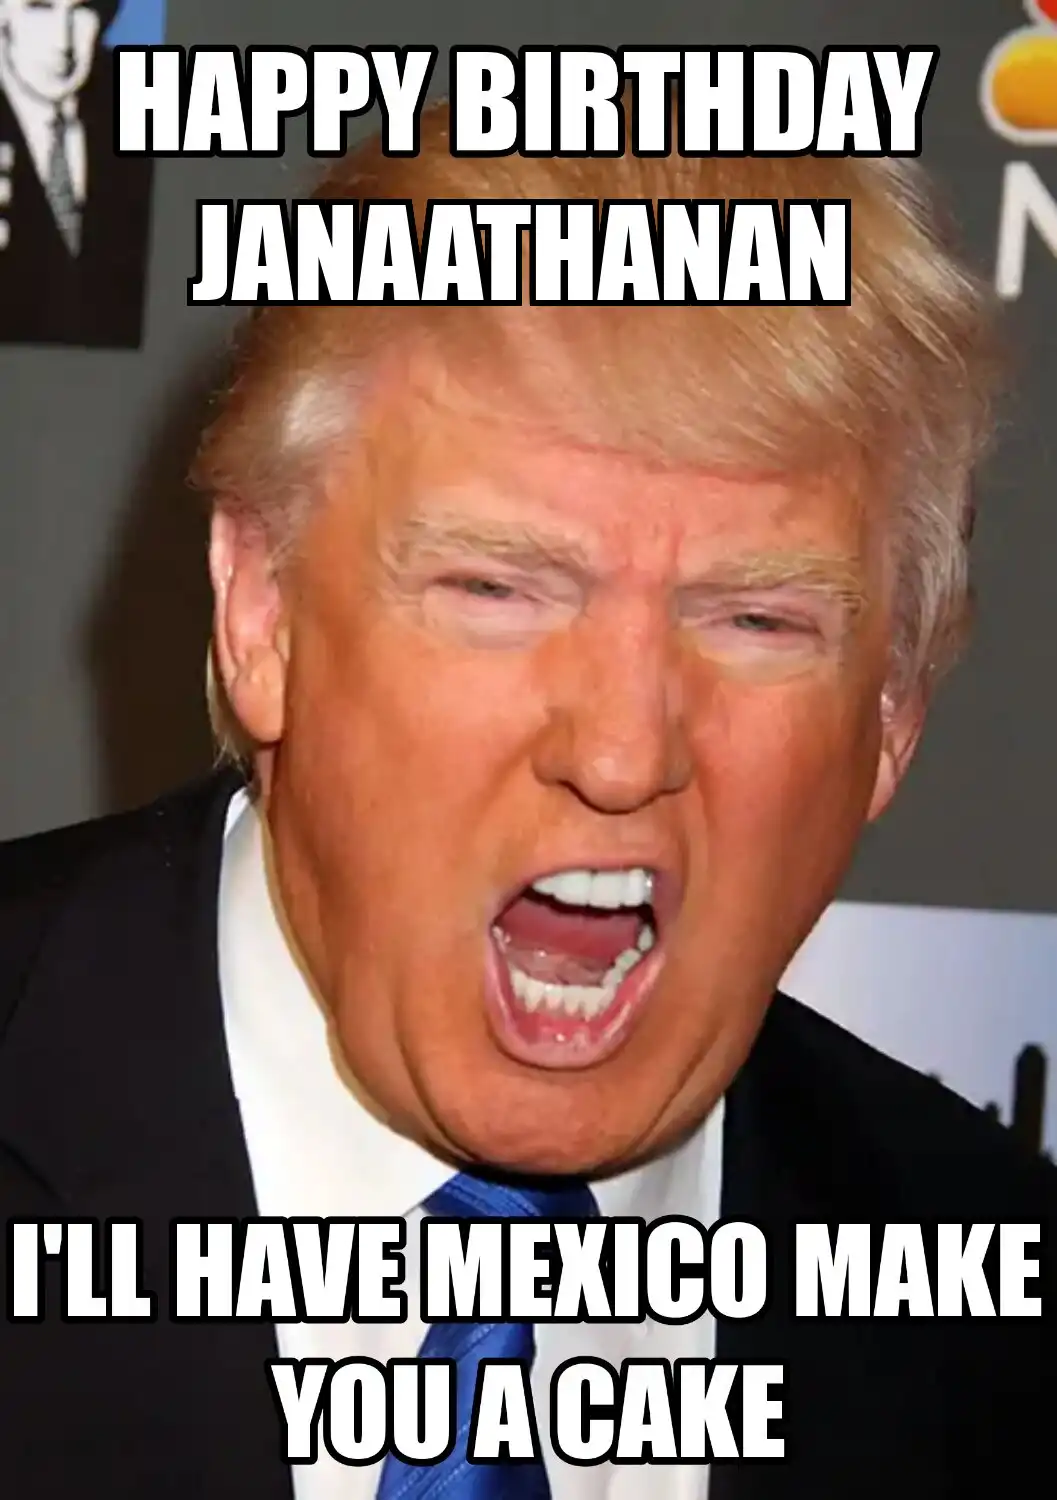 Happy Birthday Janaathanan Mexico Make You A Cake Meme